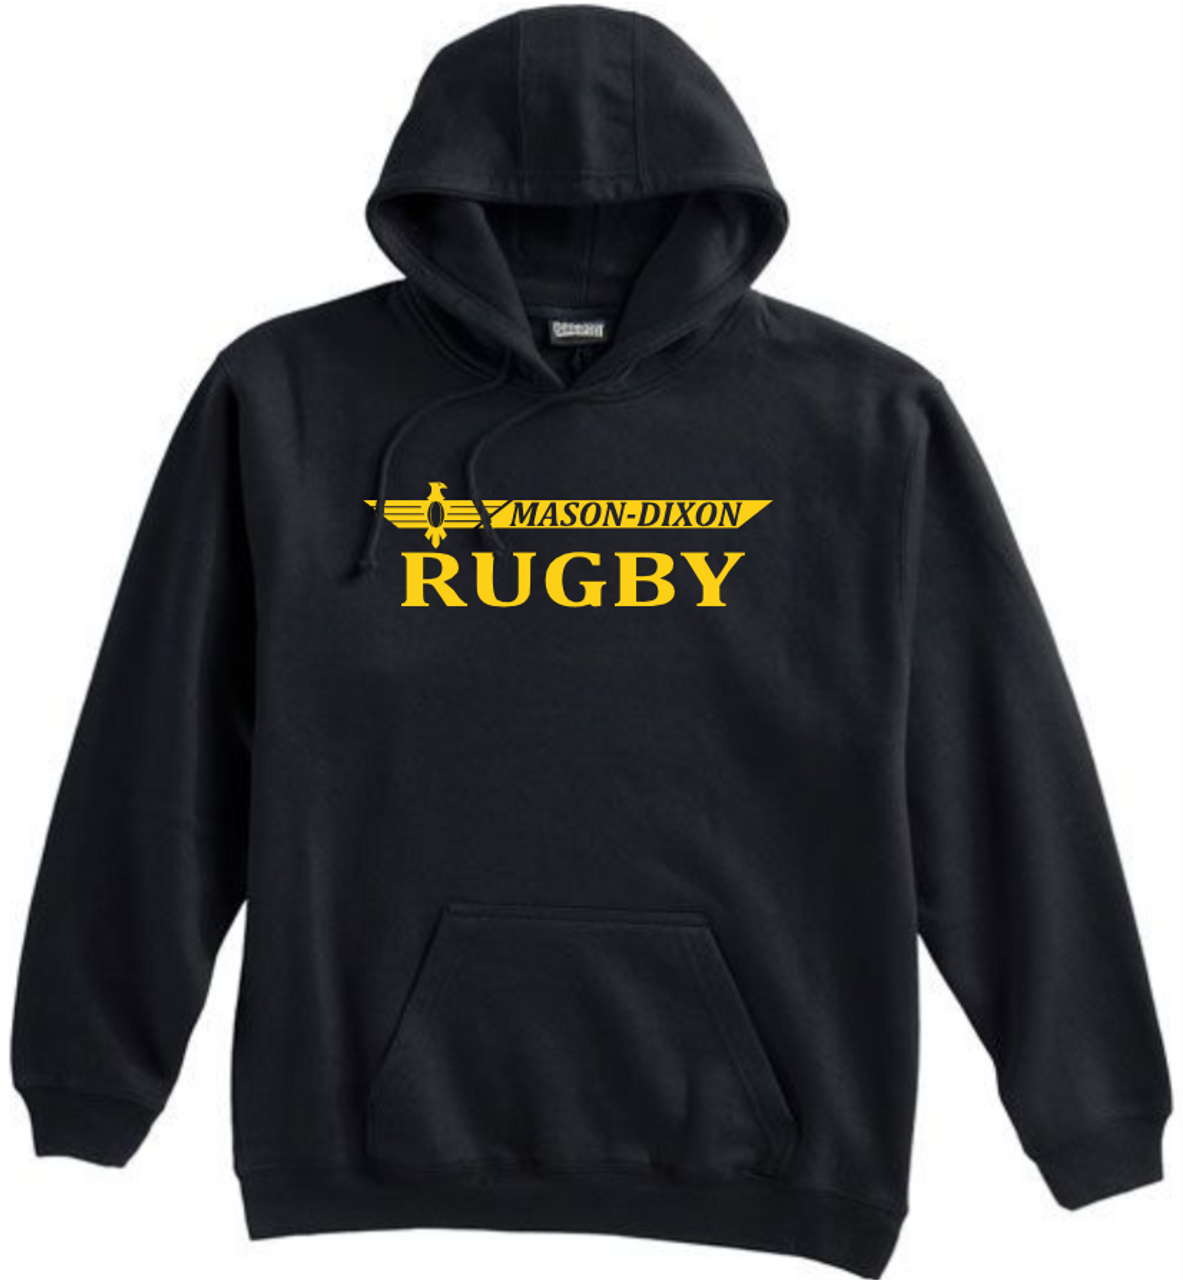 Mason-Dixon Youth Rugby Hooded Sweatshirt, Black